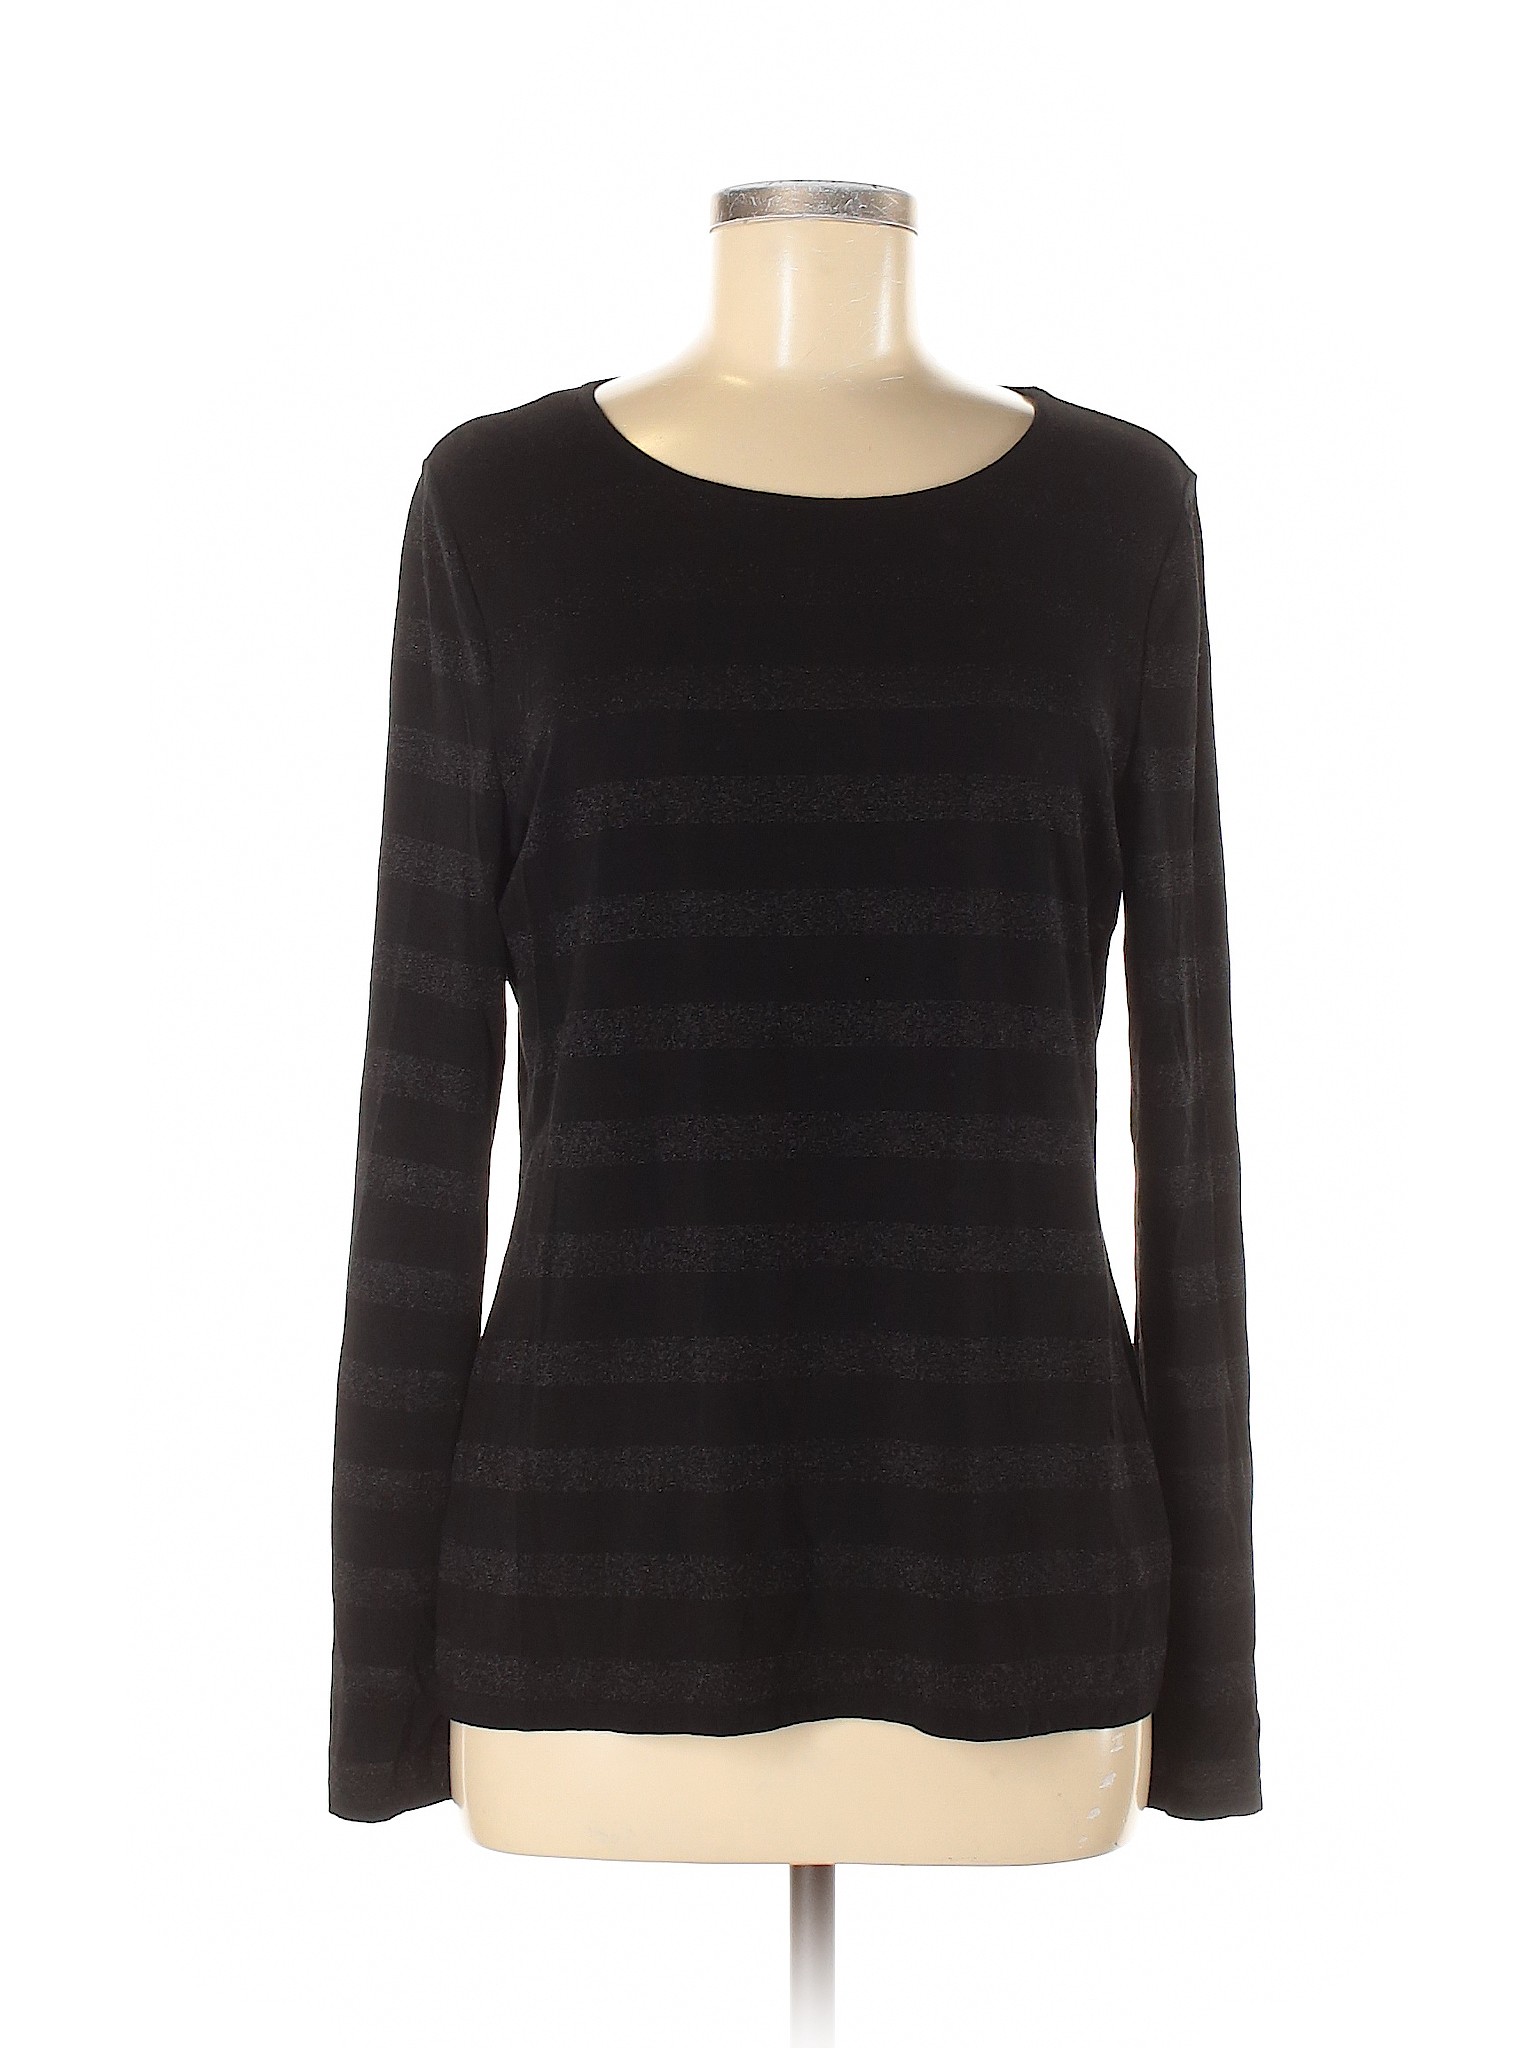 Talbots Women Black Long Sleeve T-Shirt M | eBay